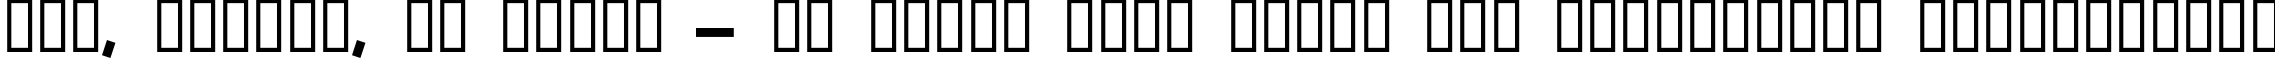 Пример написания шрифтом Klondike Bold текста на украинском